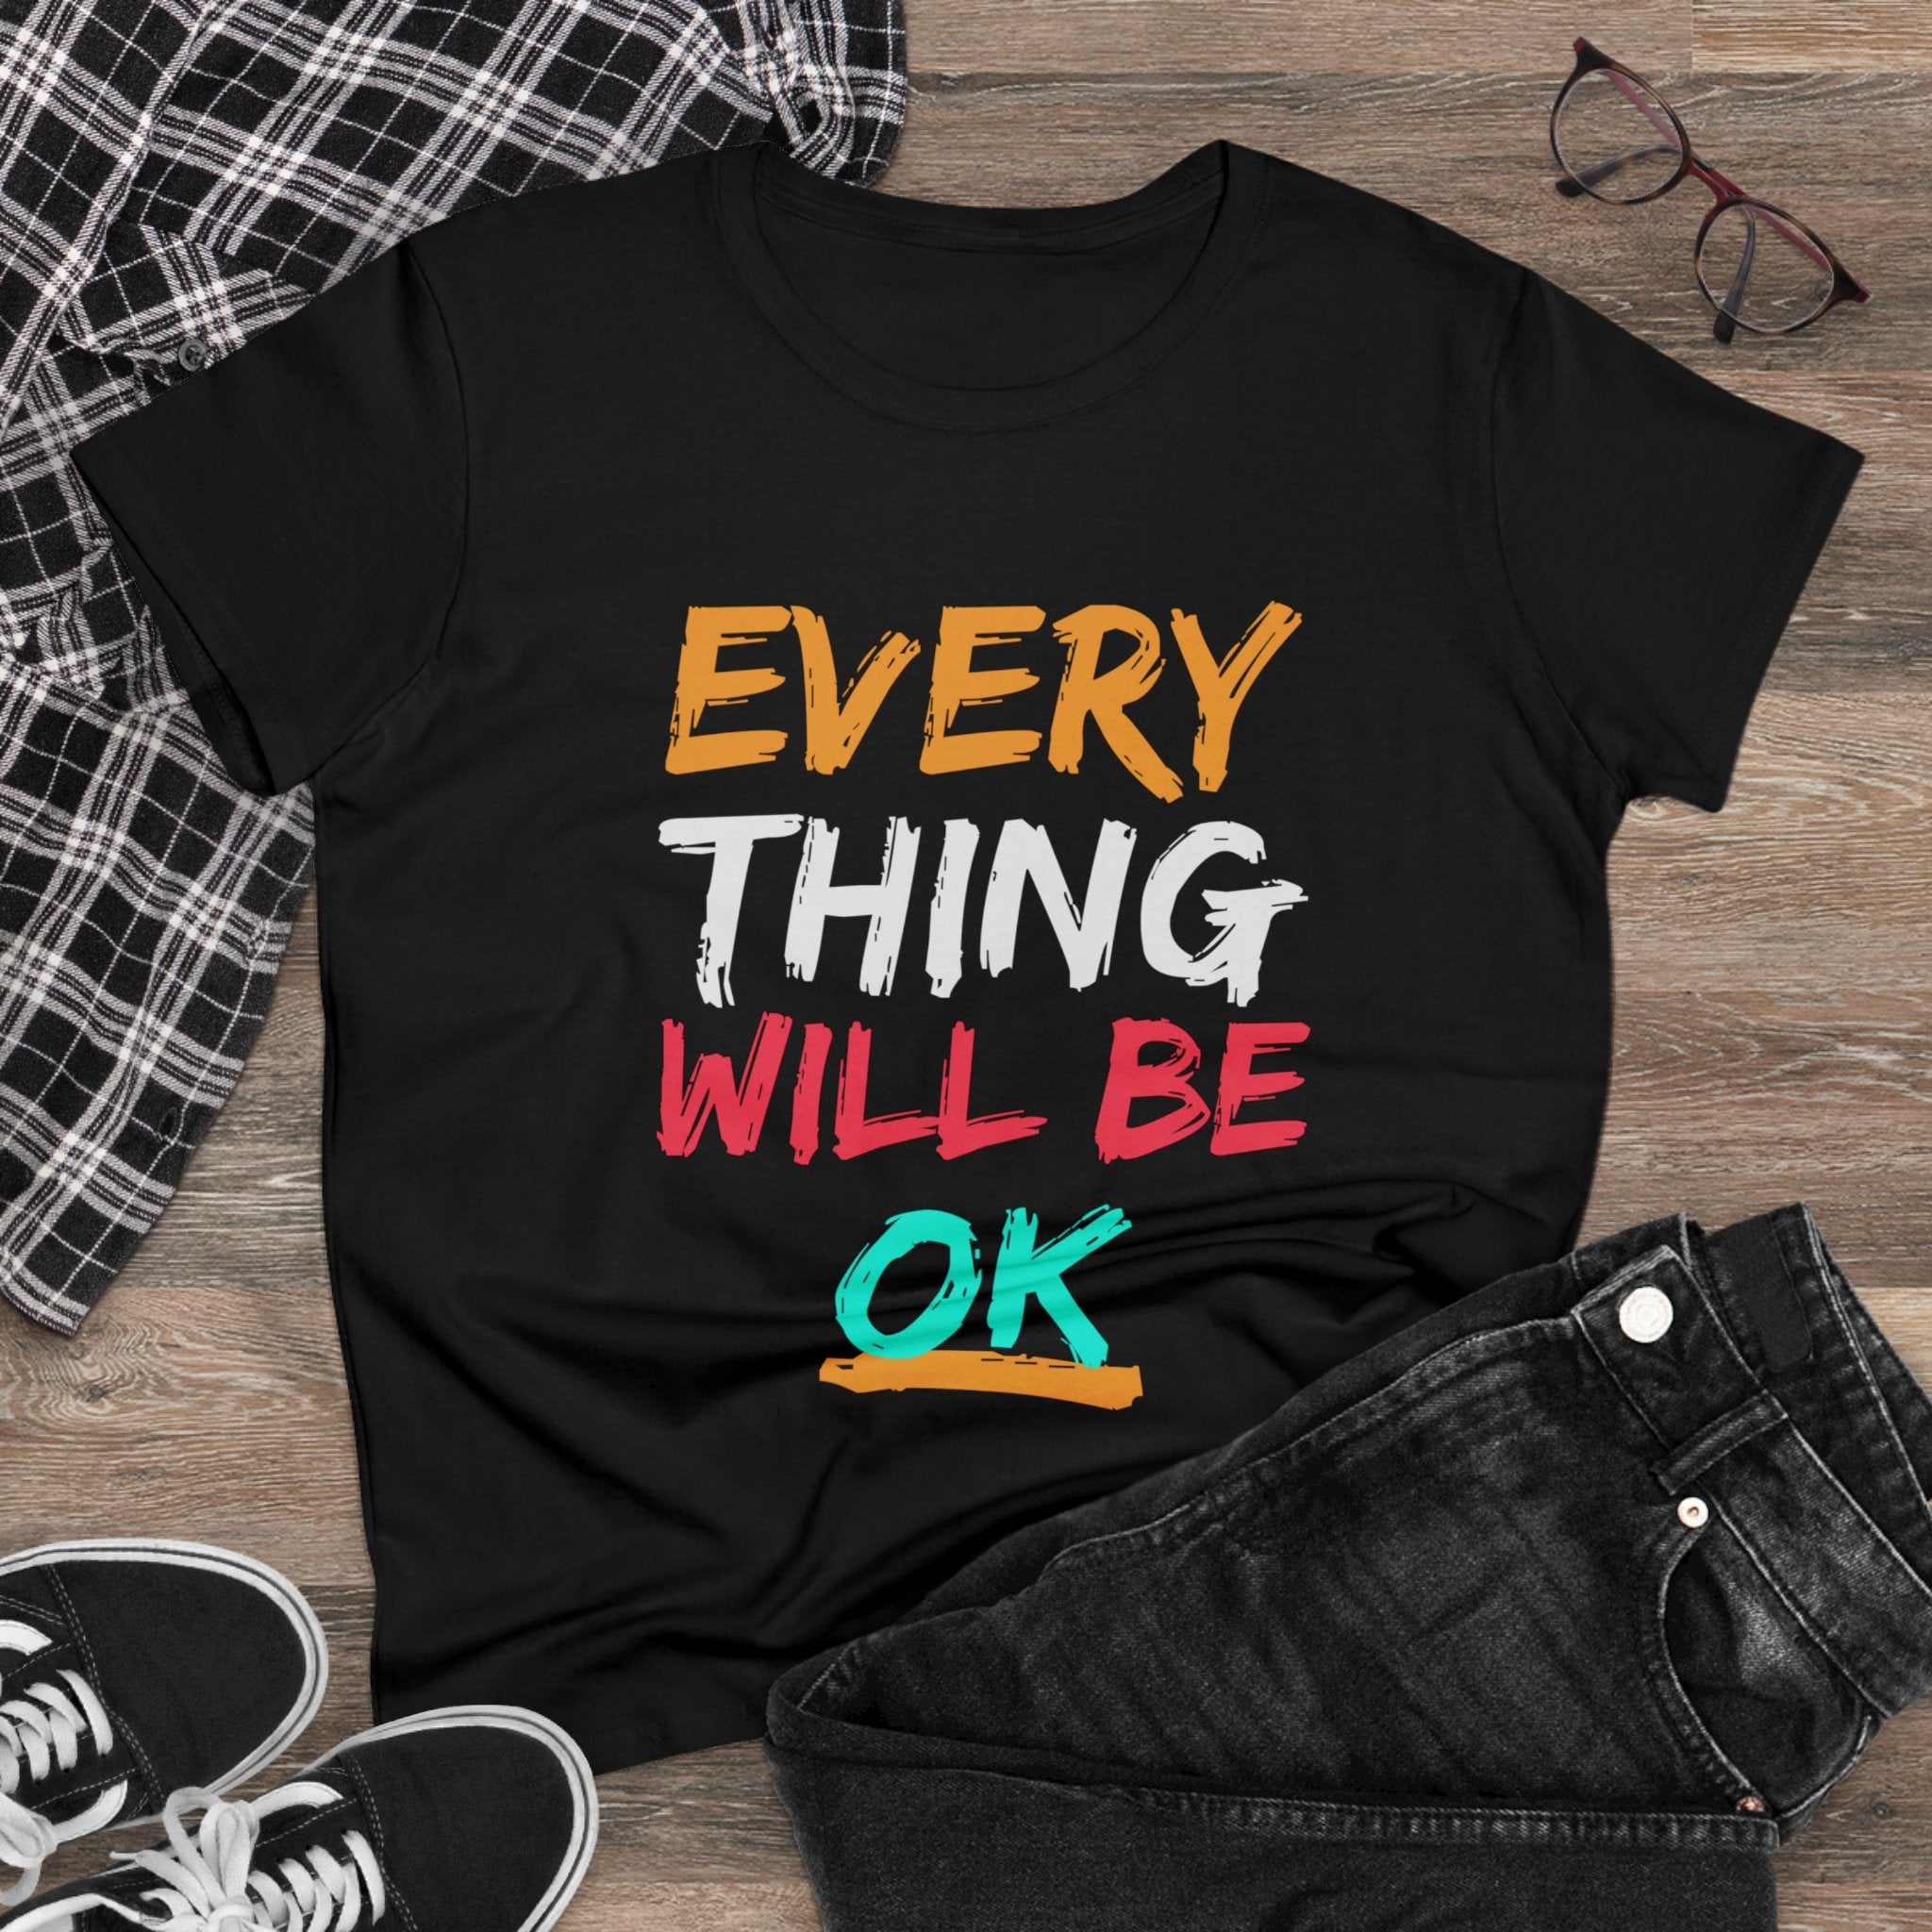 Everything will be Ok - Women'sTee